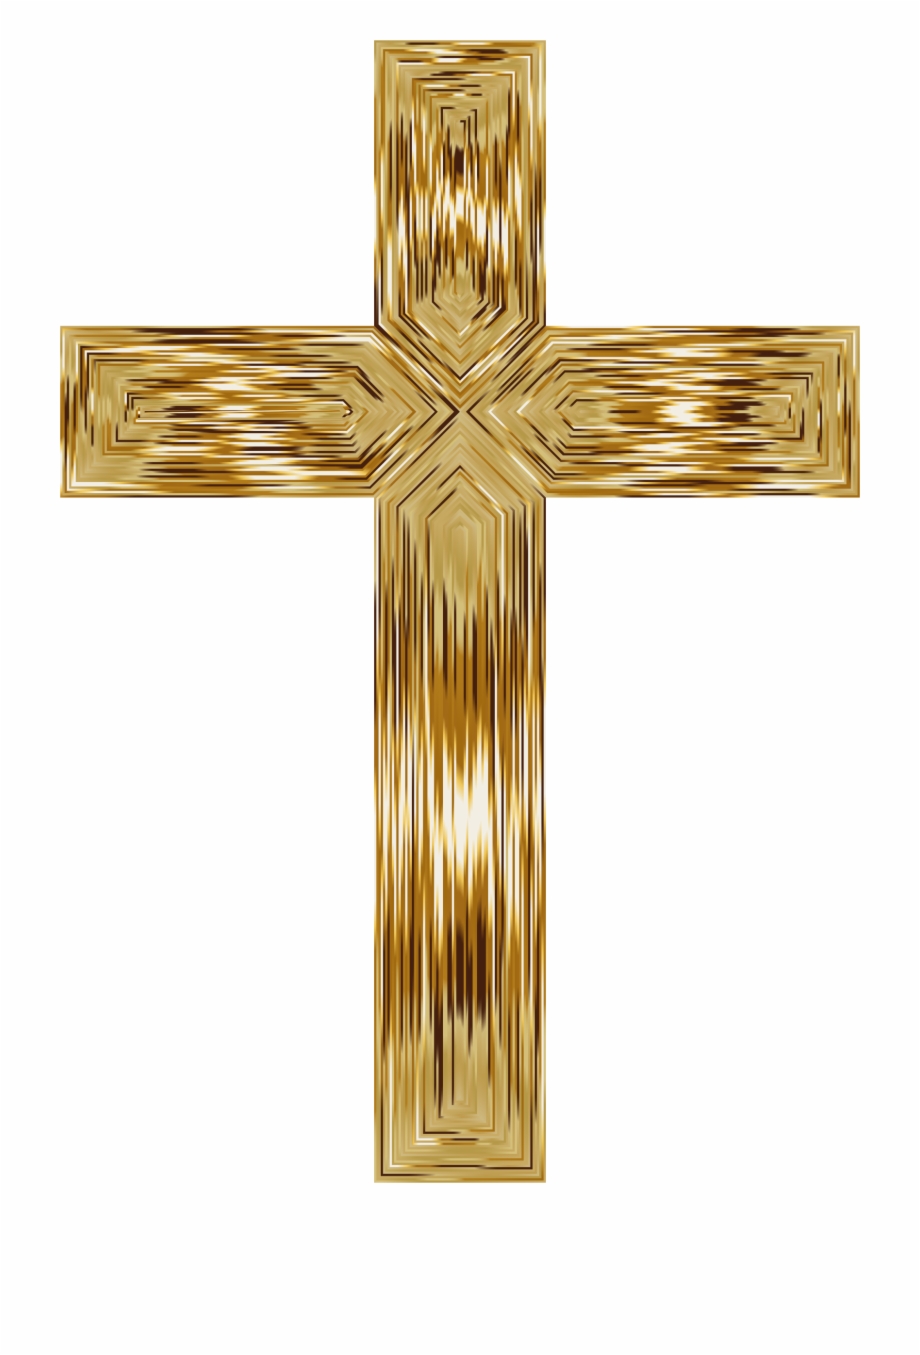 Gold Cross Transparent Gold Cross Png